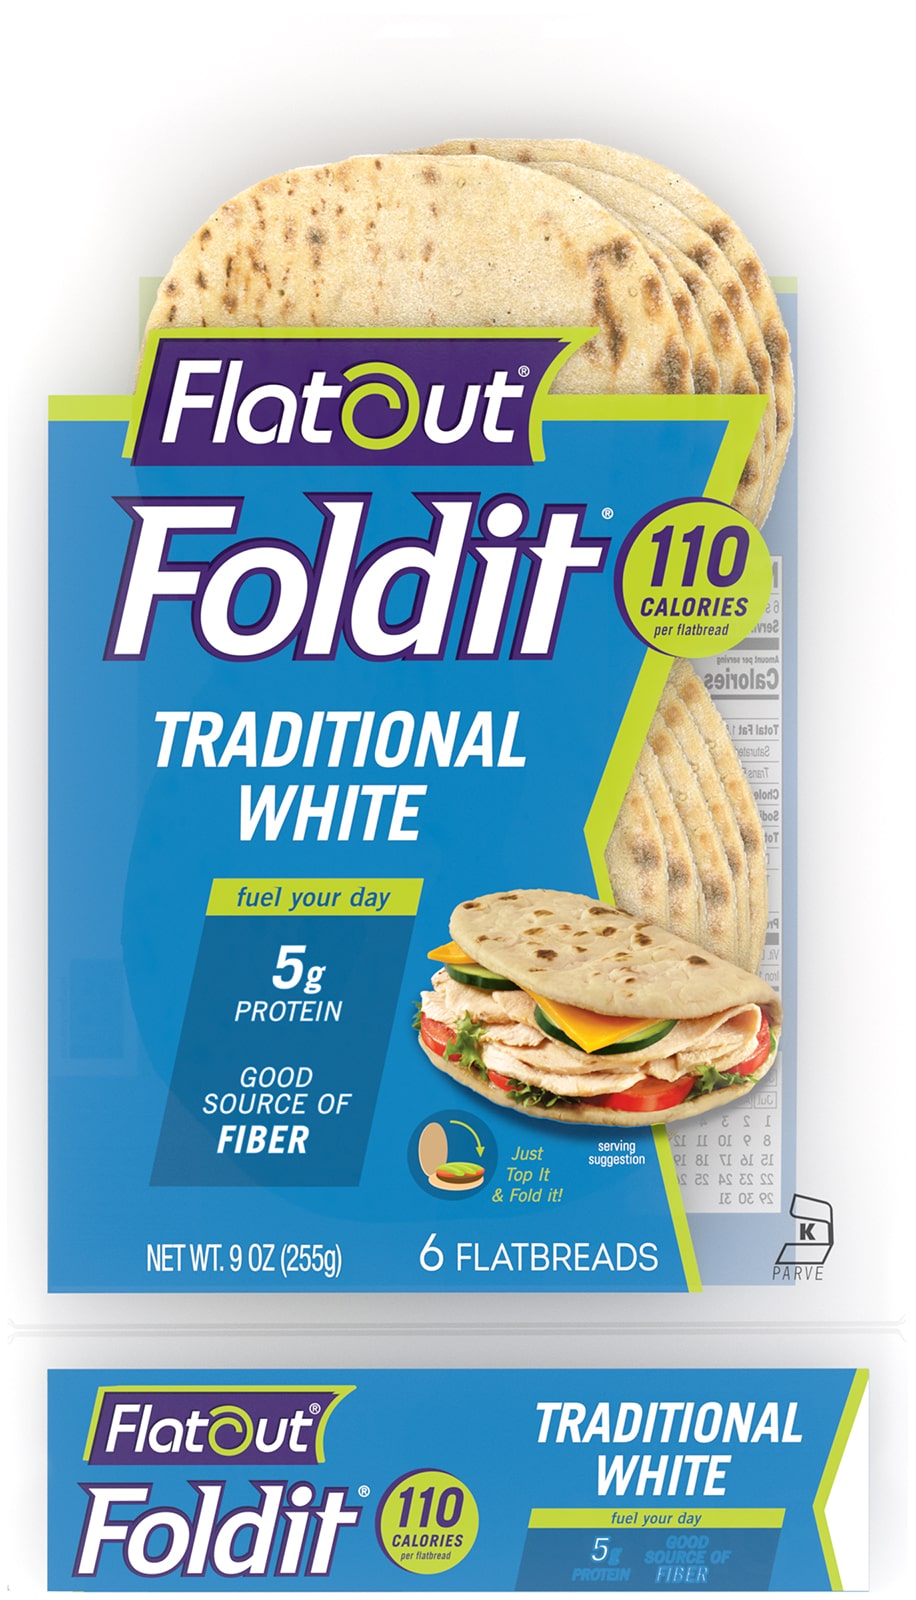 Flatout® Foldit Traditional White Flatbread